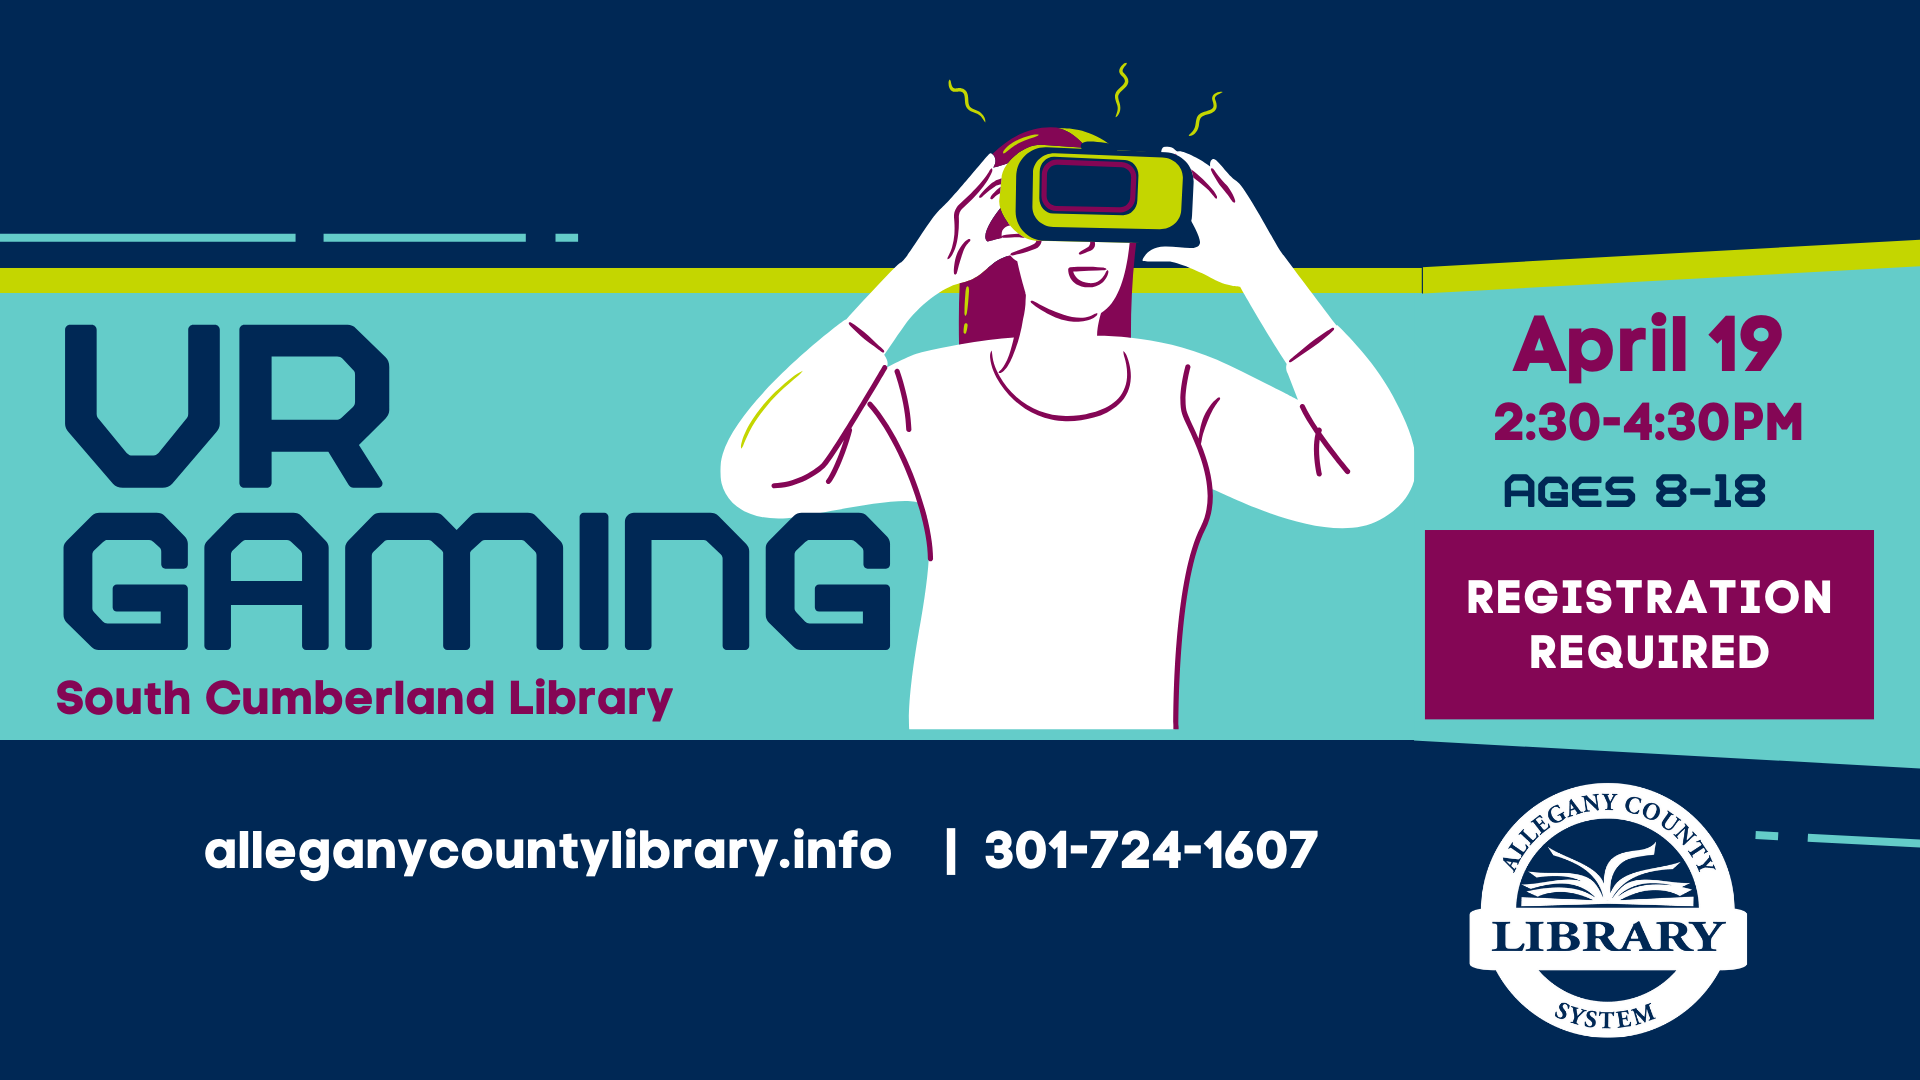 VR Gaming at South Cumberland Library April 19